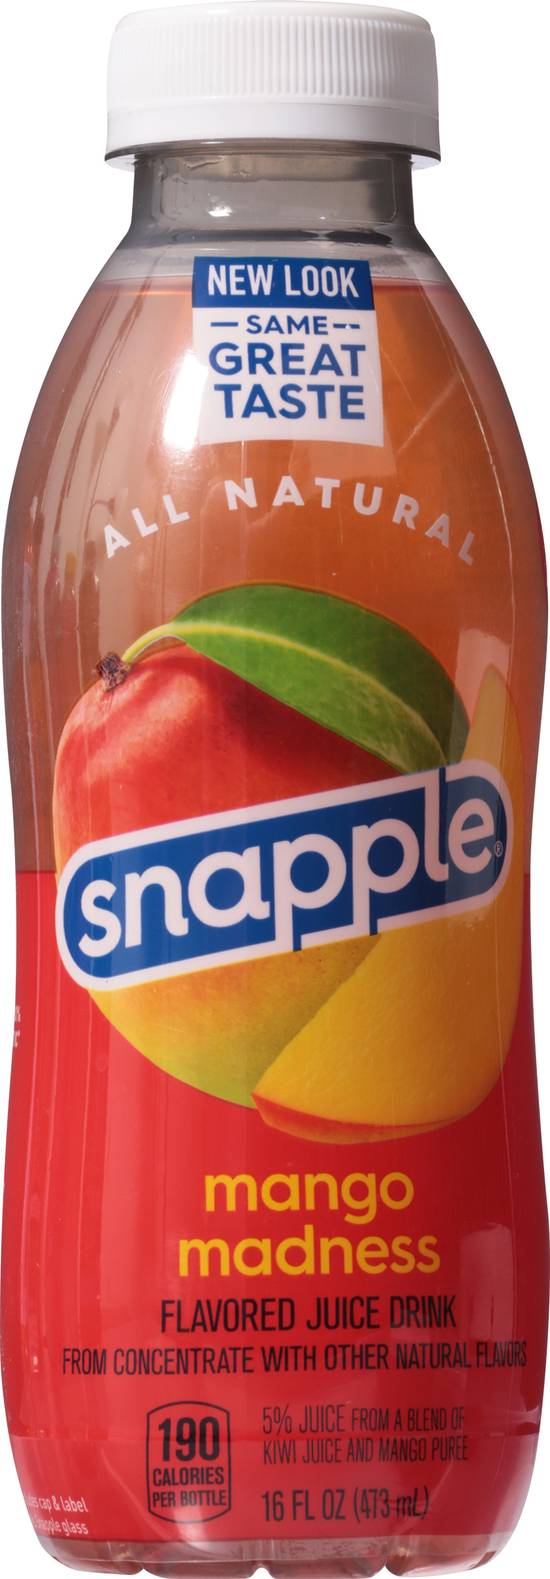 Snapple Mango Madness Flavored Juice Drink (16 fl oz)